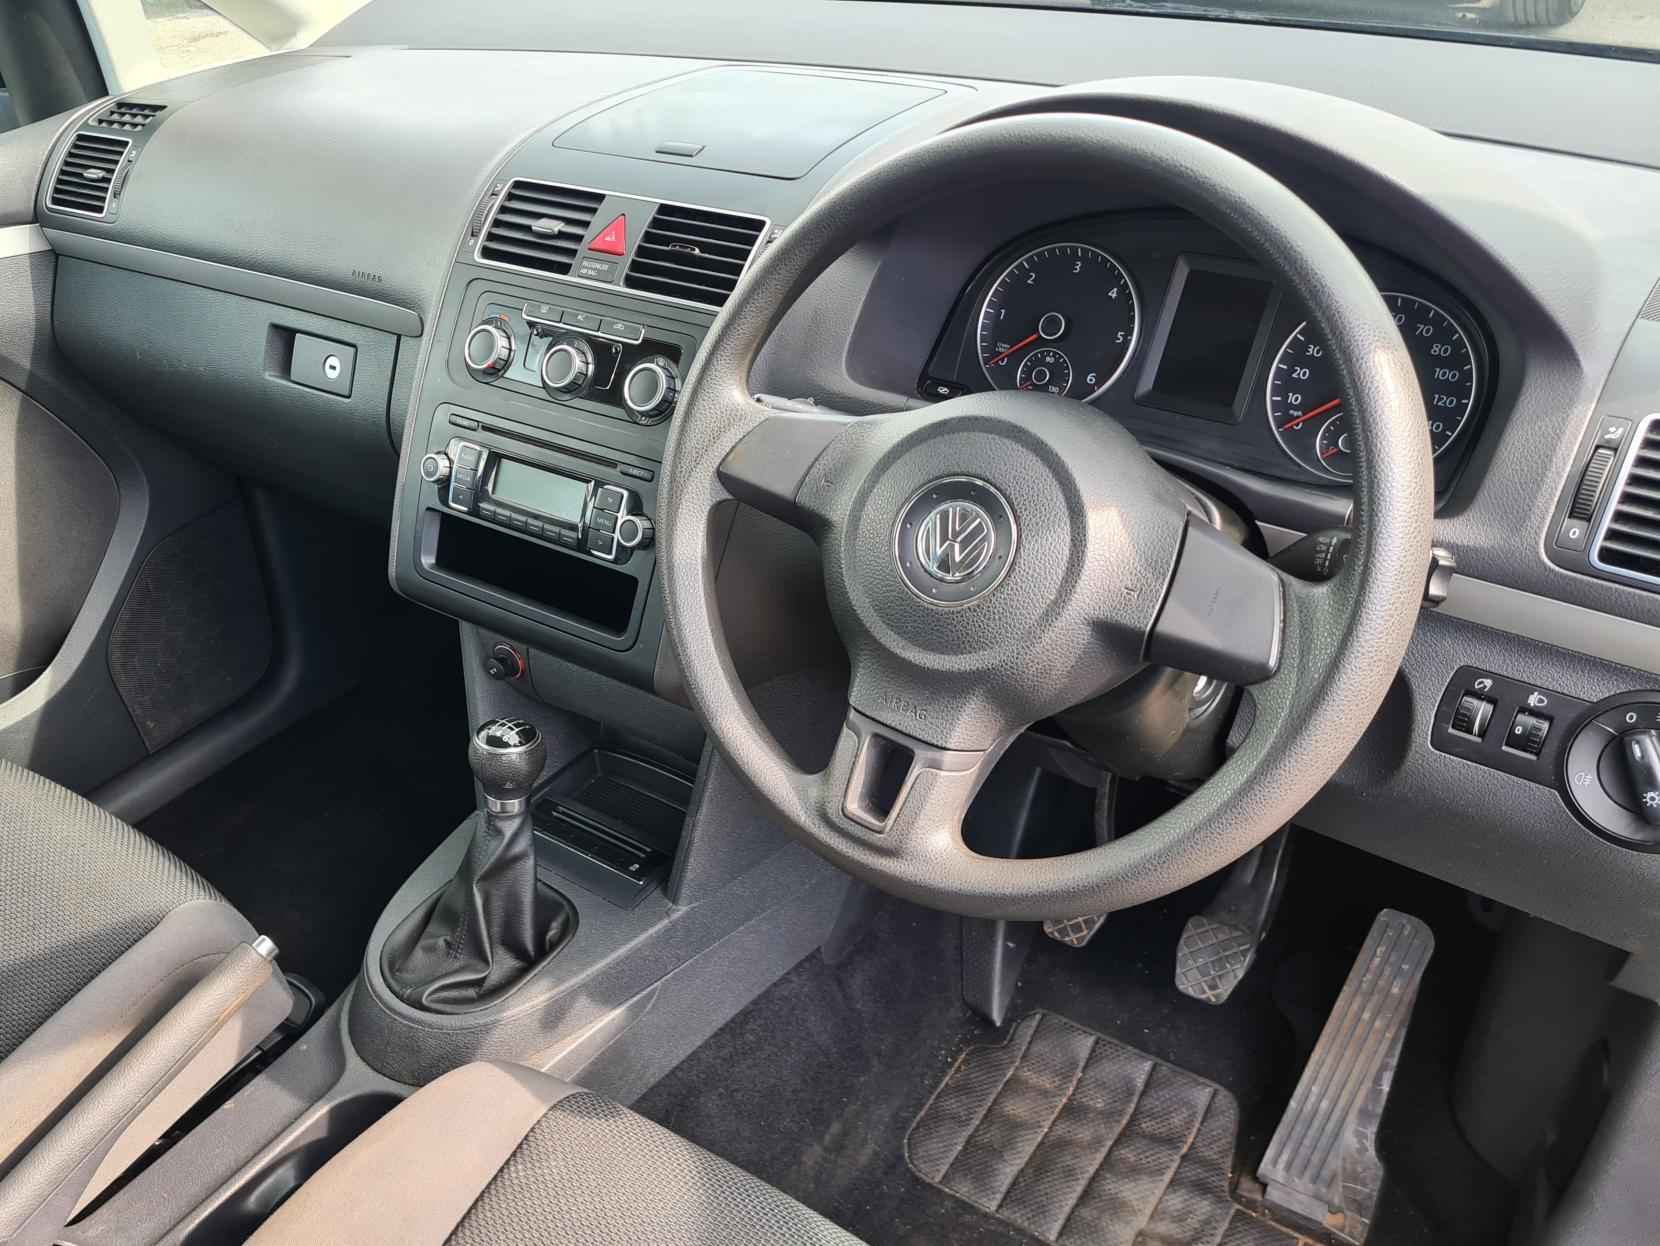 Volkswagen Touran 1.6 TDI S MPV 5dr Diesel Manual Euro 5 (105 ps)